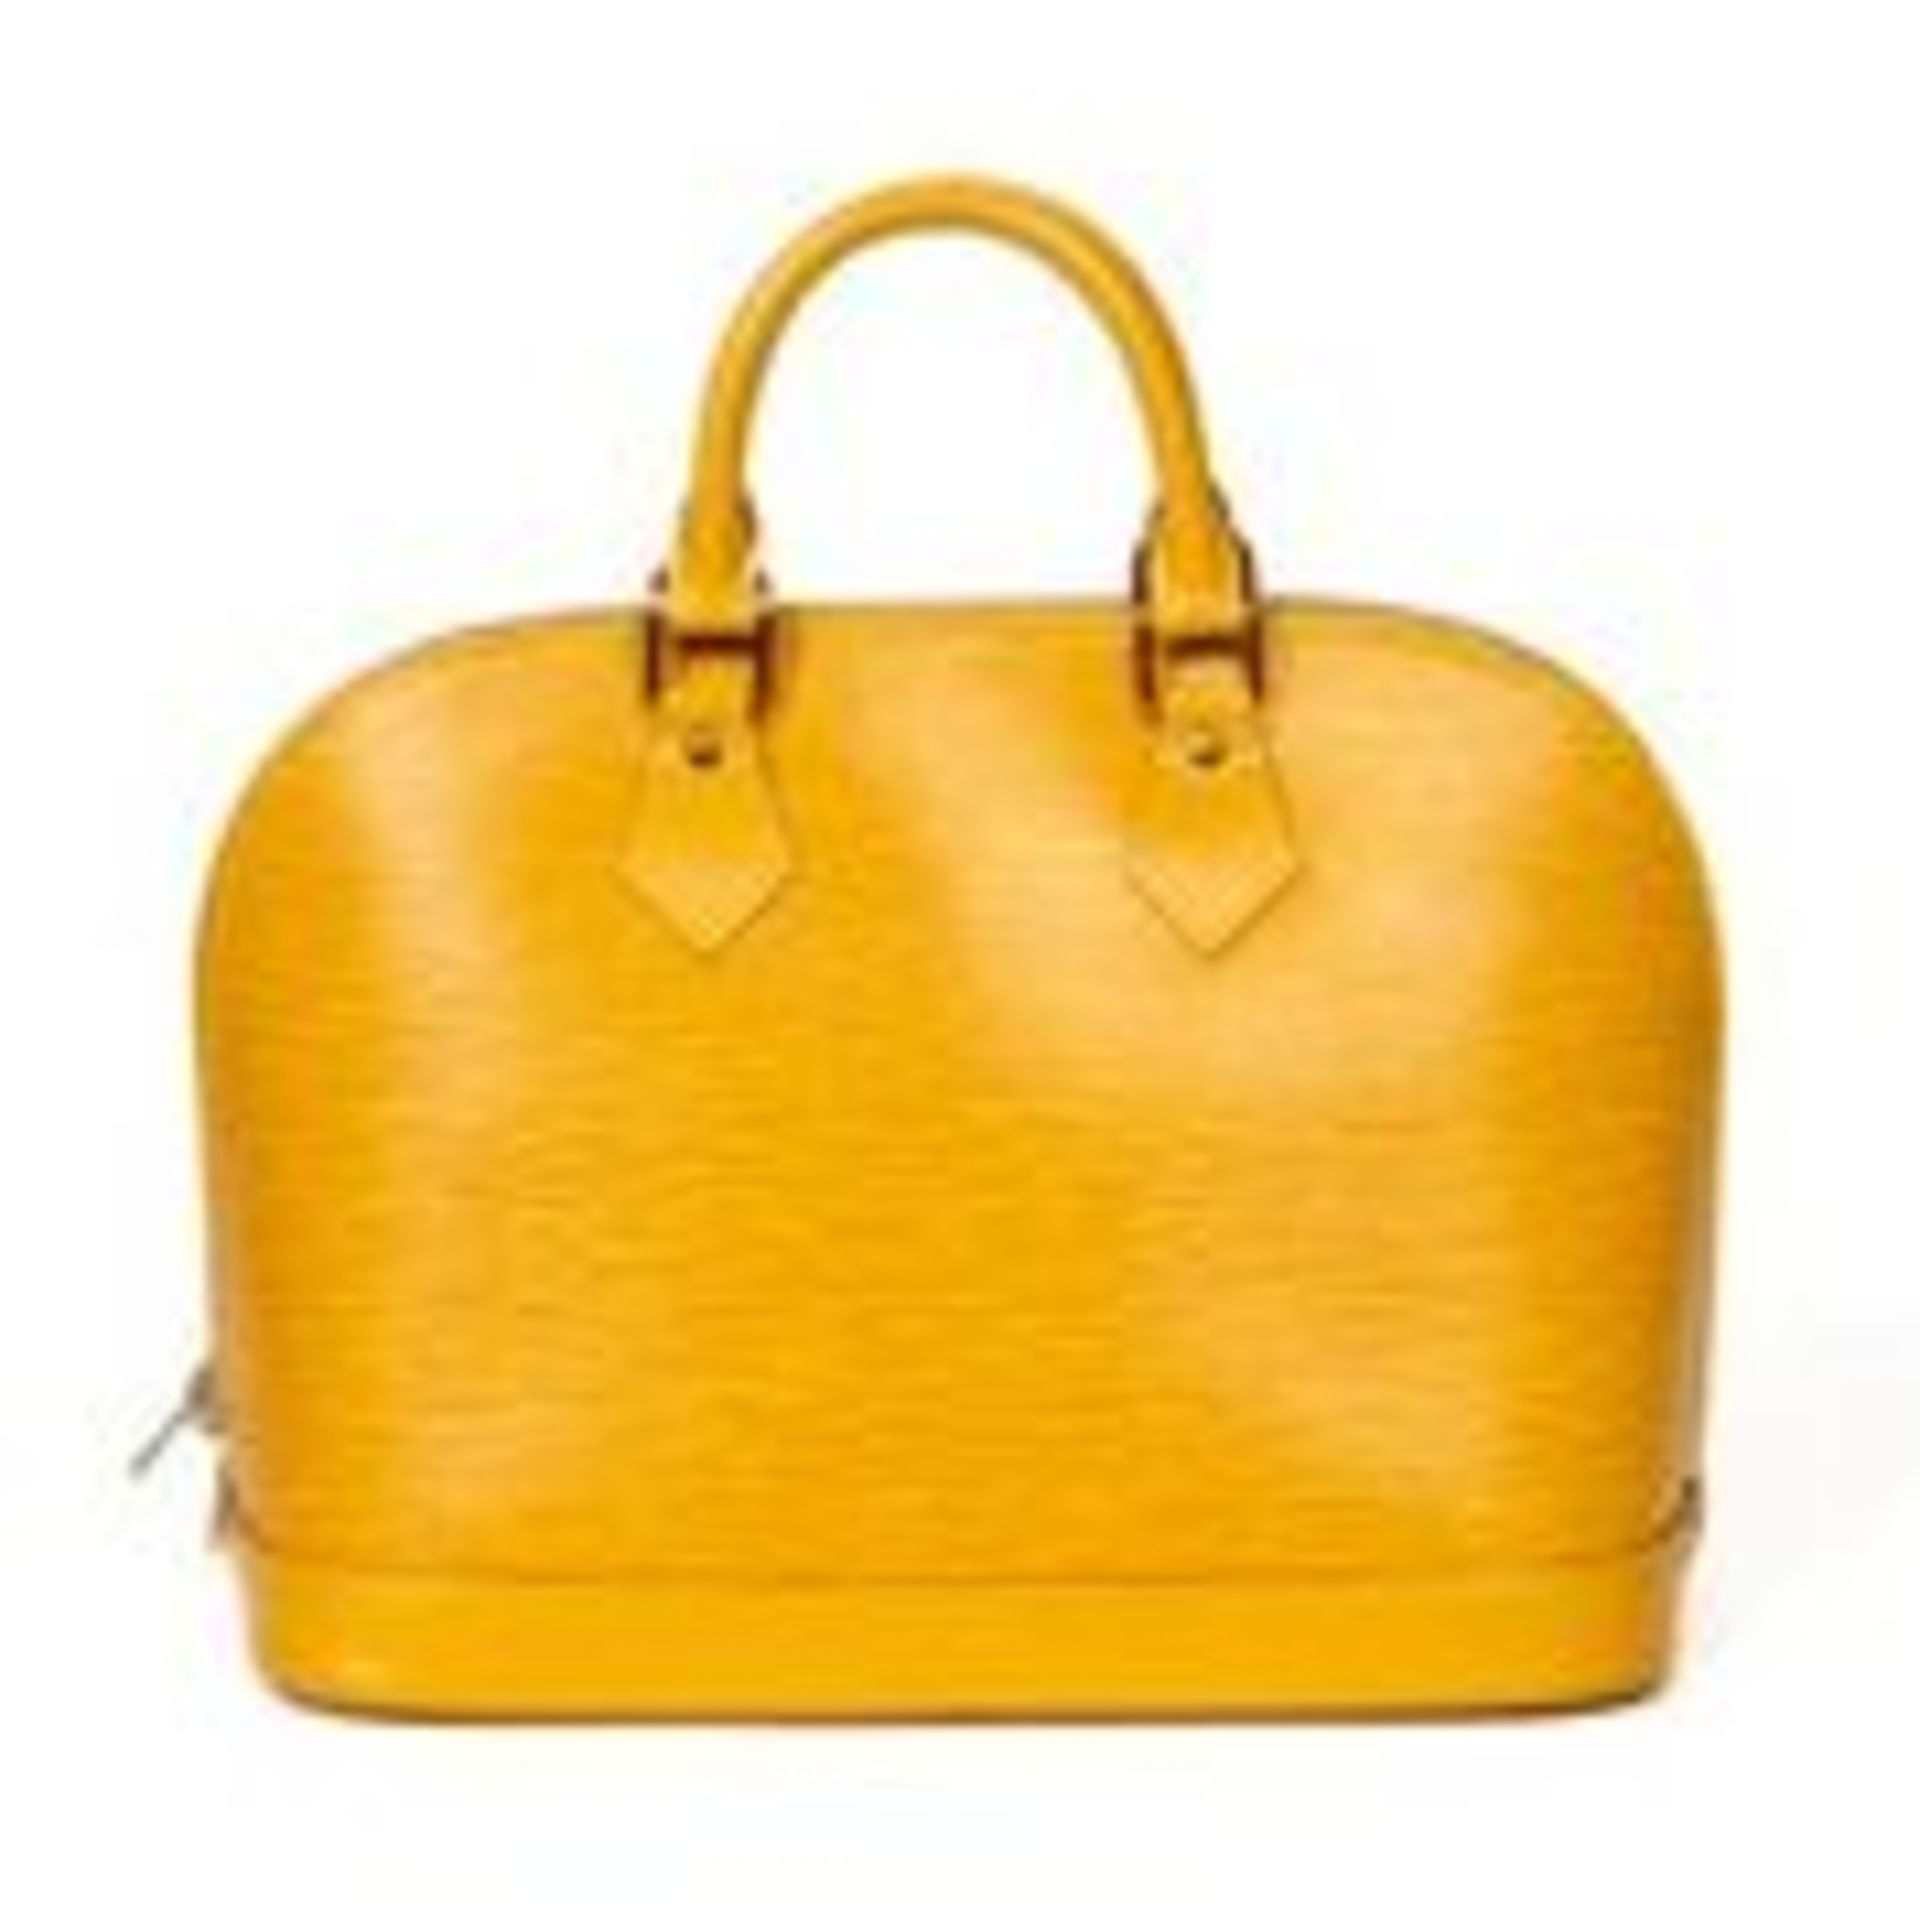 RRP £1,550 Louis Vuitton Alma Handbag Yellow - AAR4541 - Grade AA - Please Contact Us Directly For